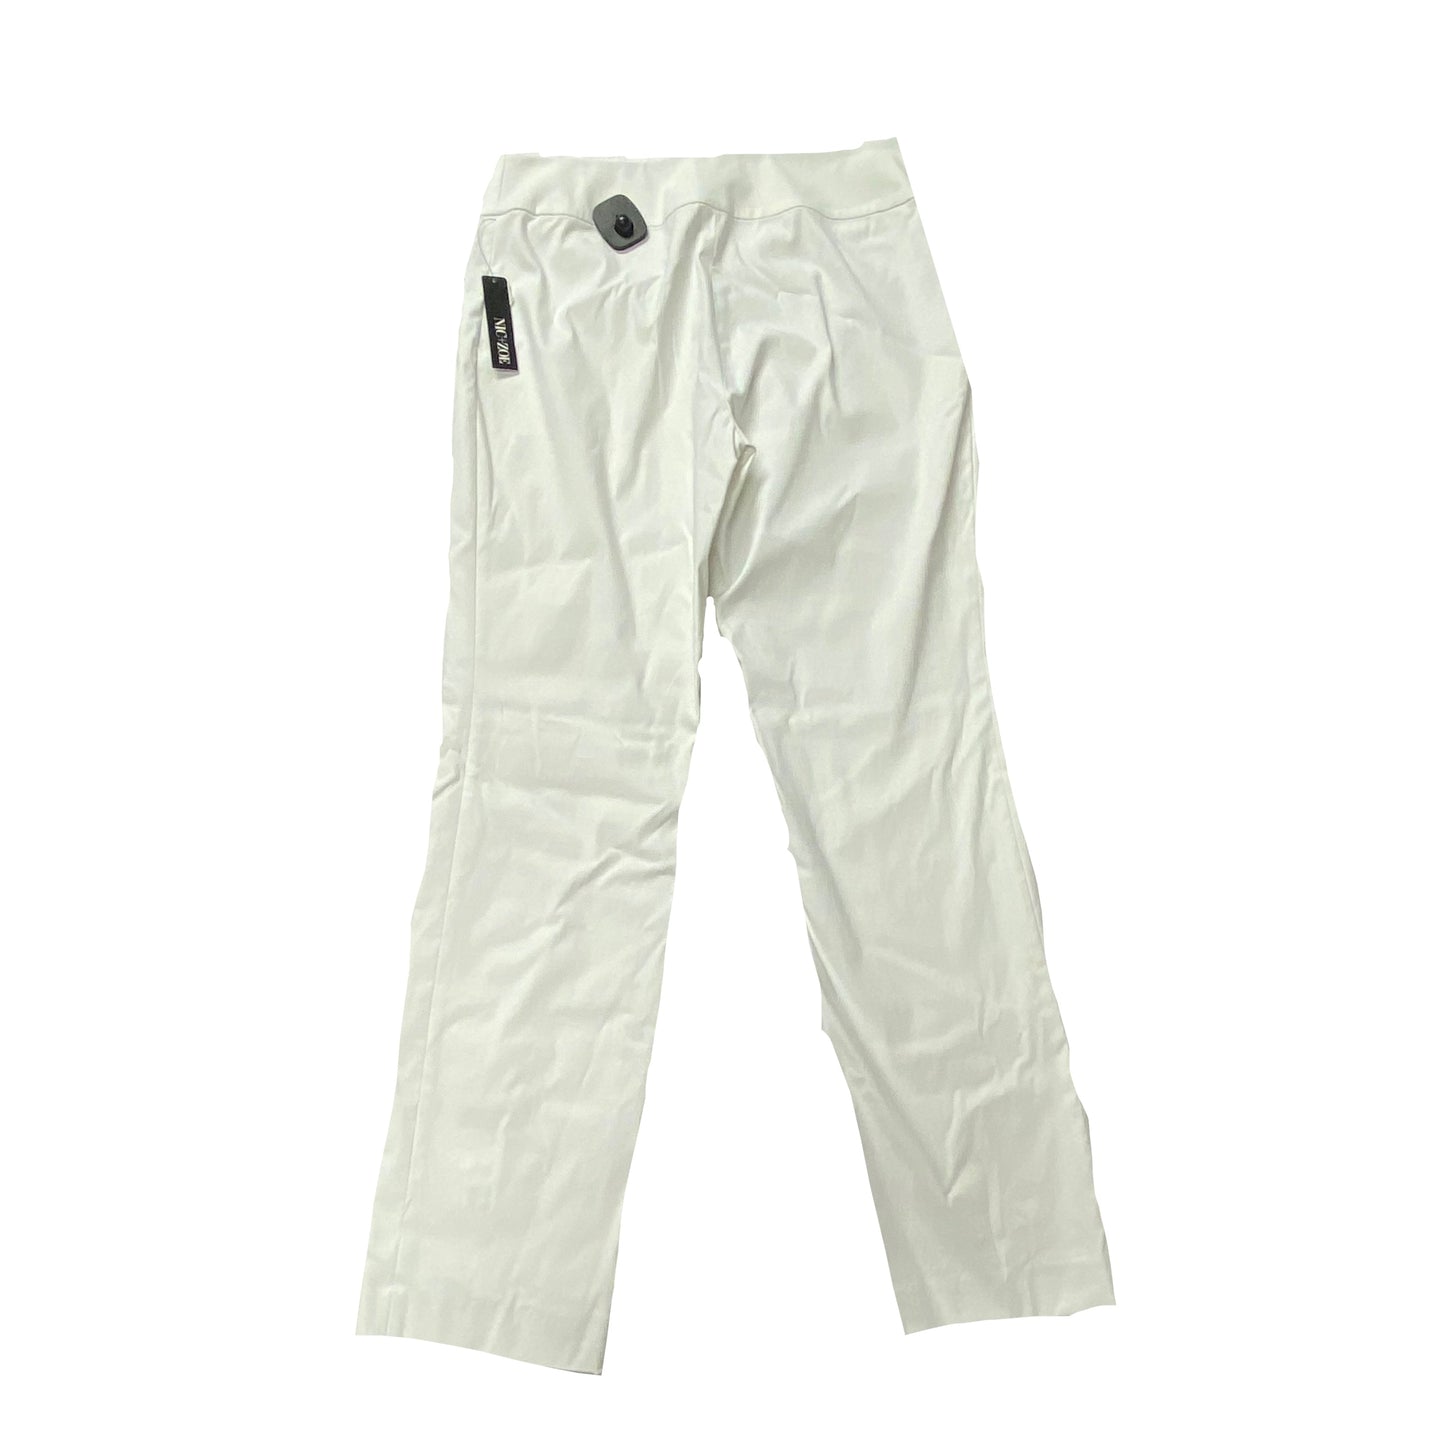 White Pants Cropped Nic + Zoe, Size 8